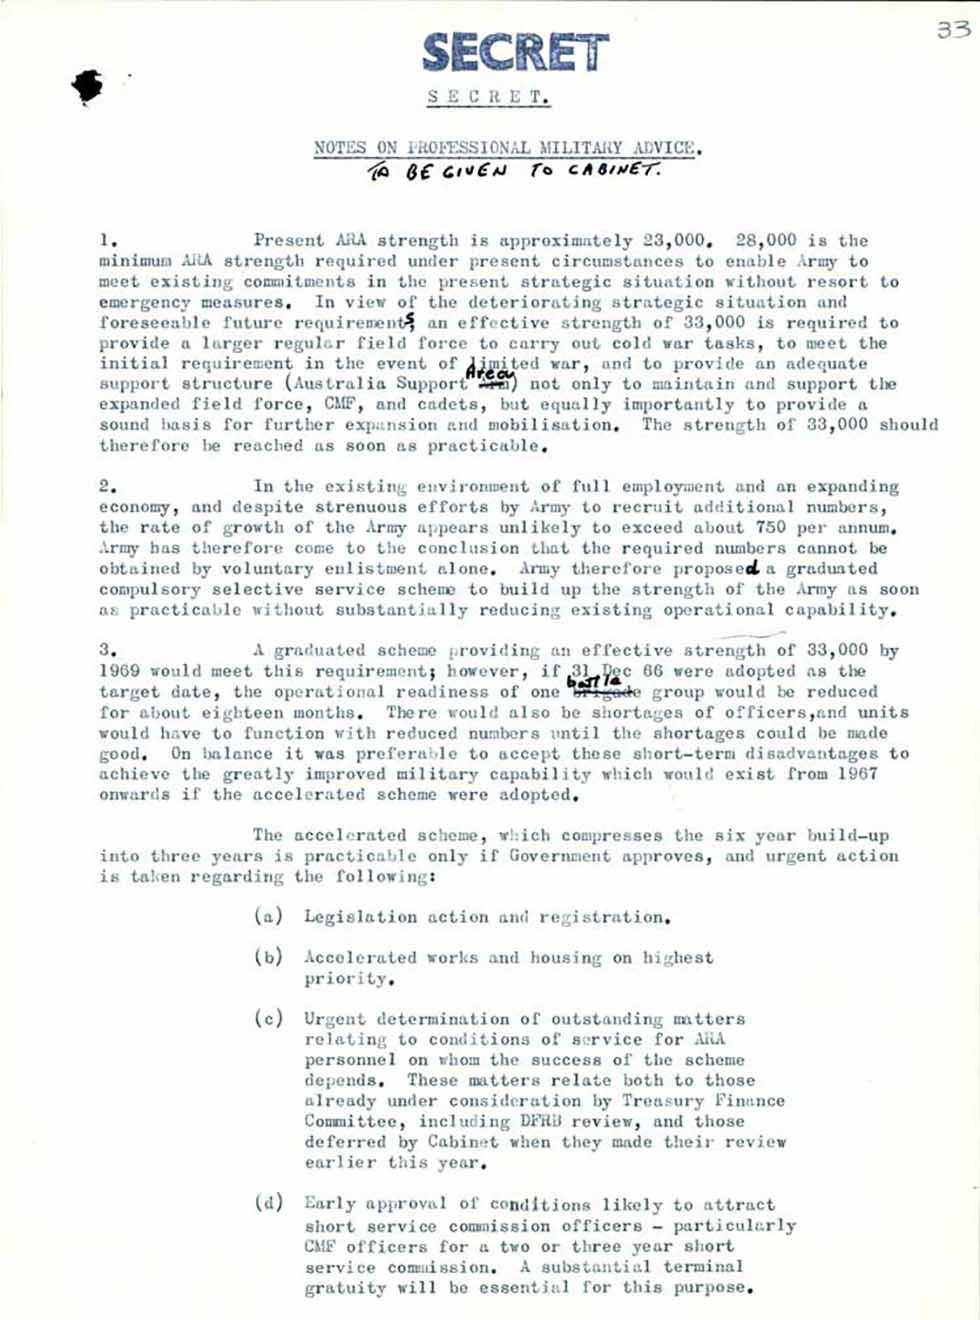 Secret memorandum for Cabinet on compulsory military service in 1964.